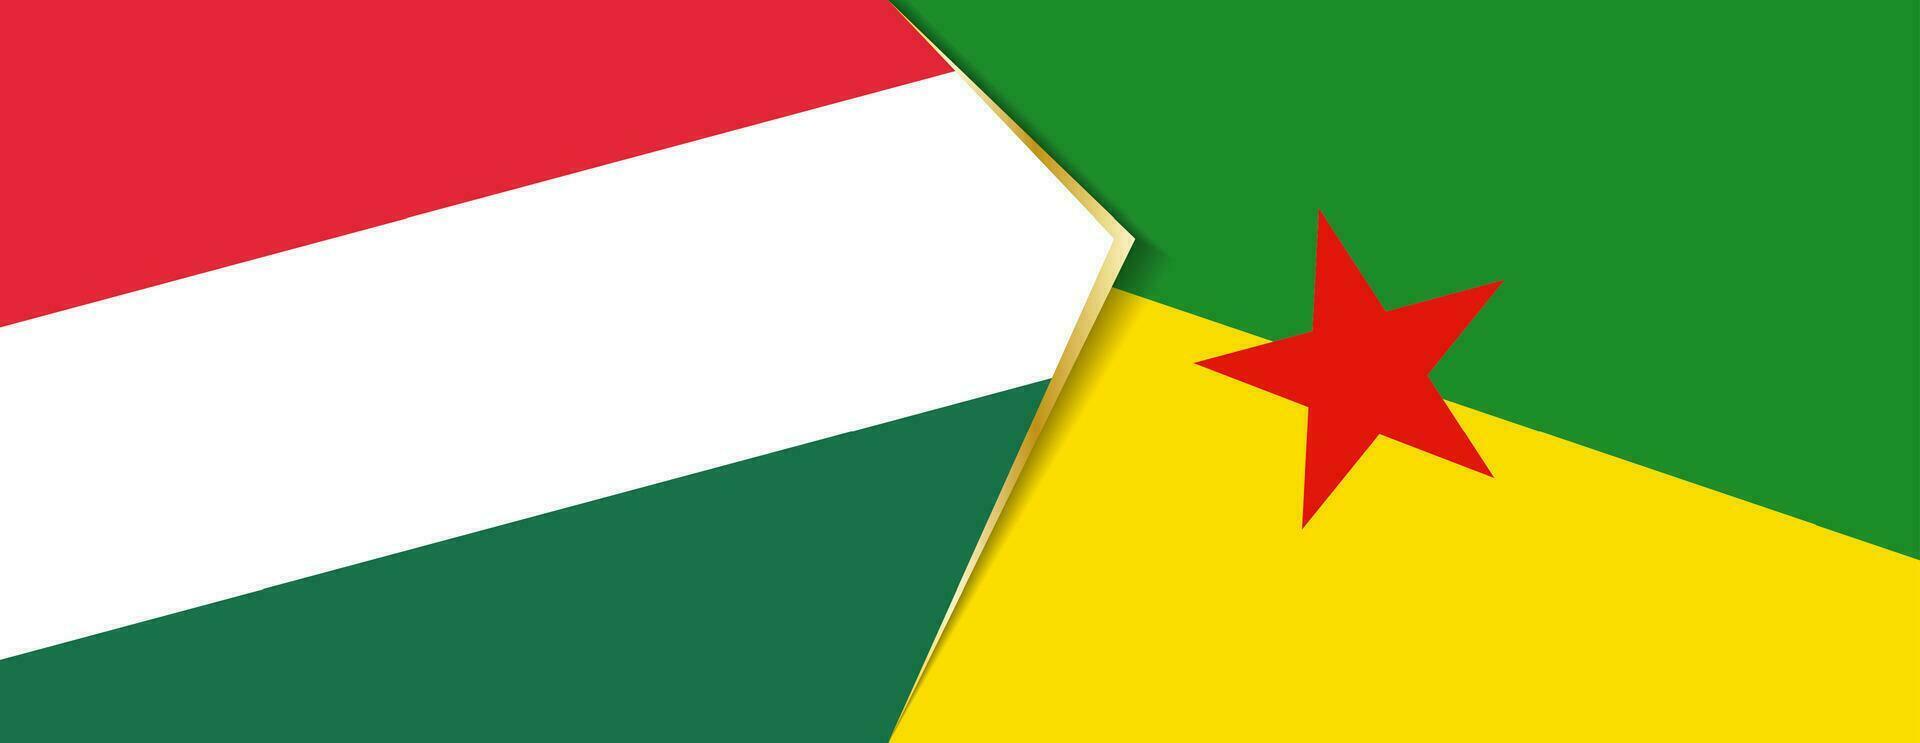 Ungheria e francese Guiana bandiere, Due vettore bandiere.